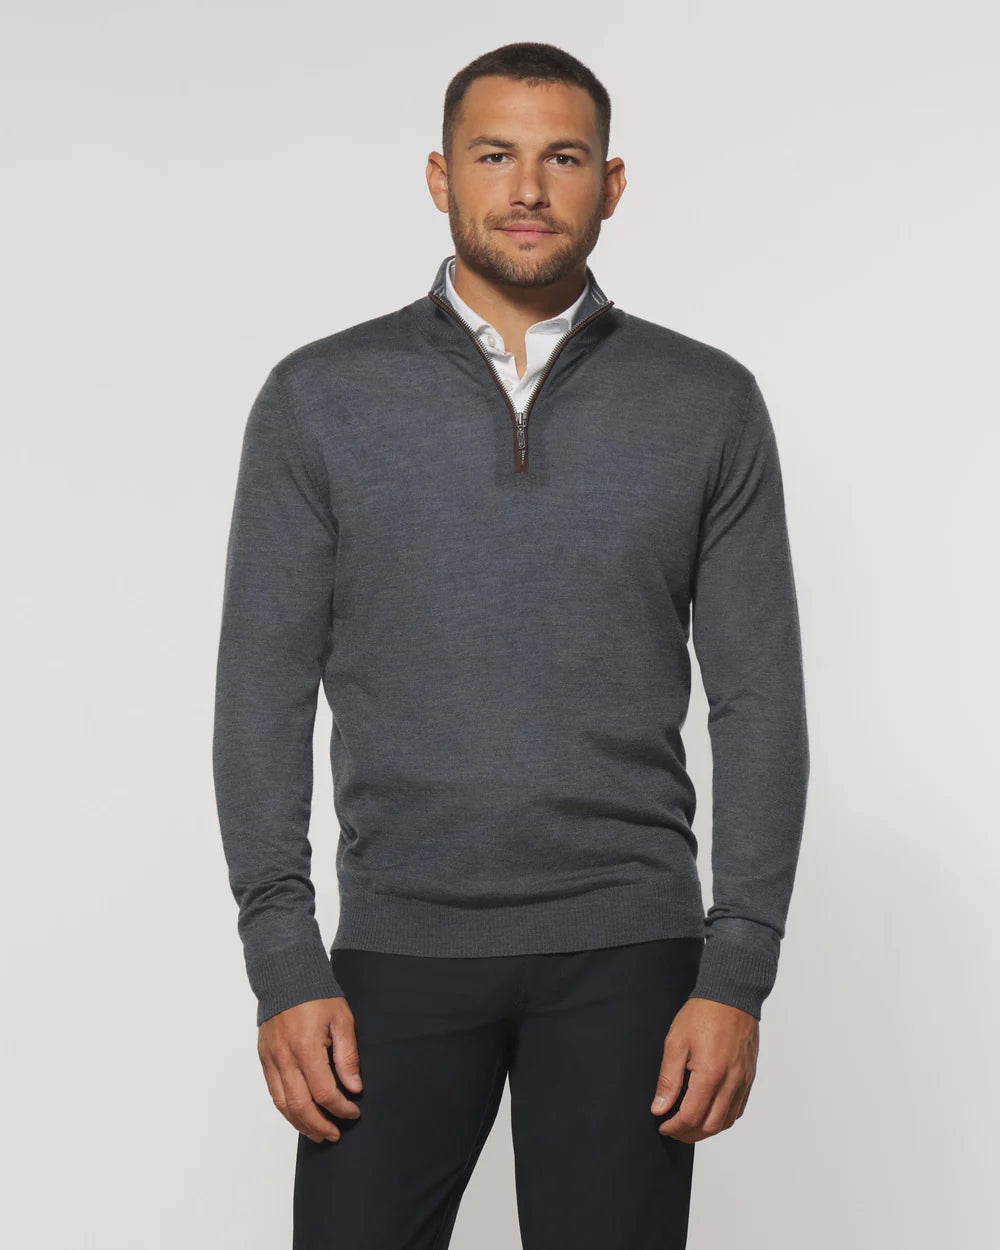 Baron Wool Blend 1/4 Zip Pullover Sweater